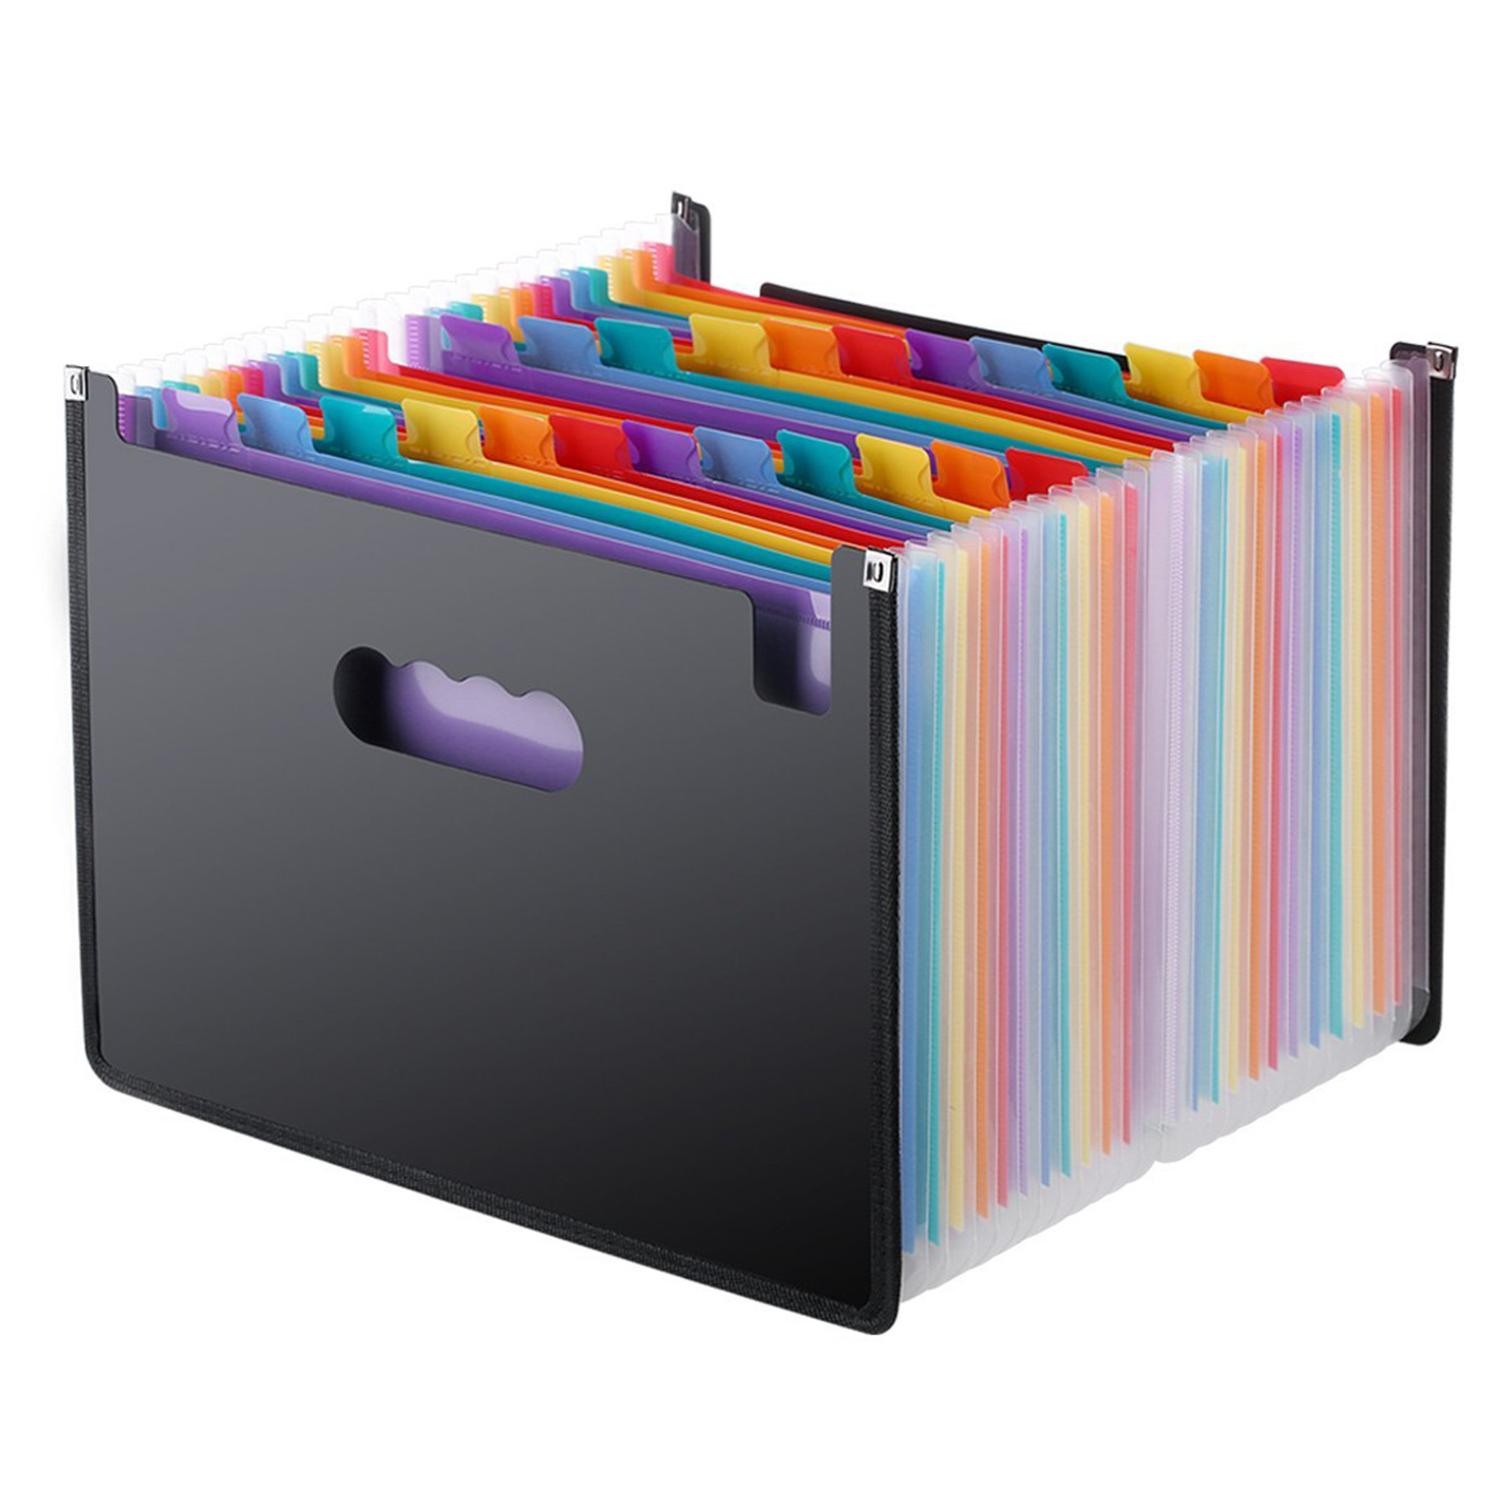 Expanding File Folder Organizer,Accordian File Organizer,Accordion Document Organizer,Expandable Filing Folders with 13 Pocket,Letter Size,Portable File Box for Paper Bill Receipt Storage Color Black 